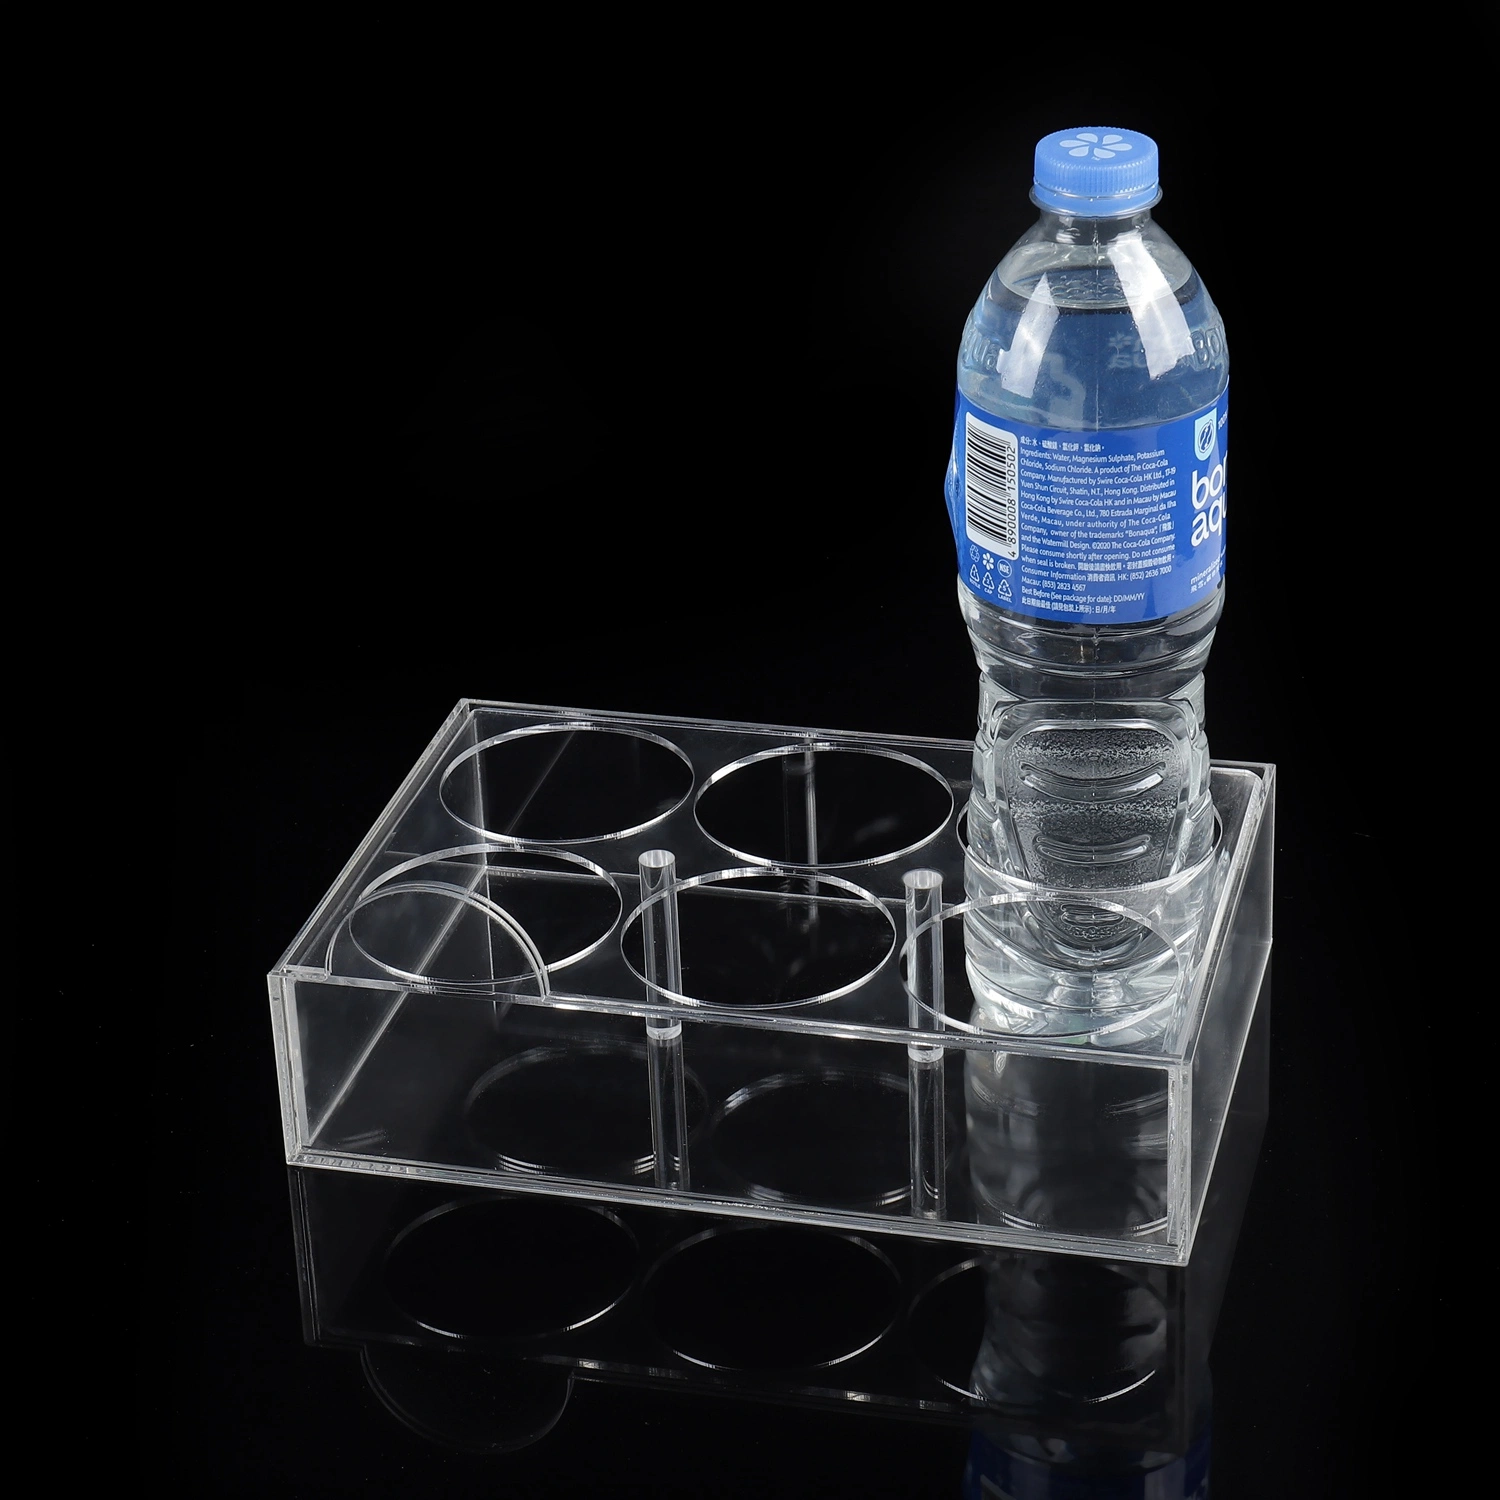 Multi Function Plastic 6 Wells Holder Rack Acrylic Display Box for Beverage Bottles